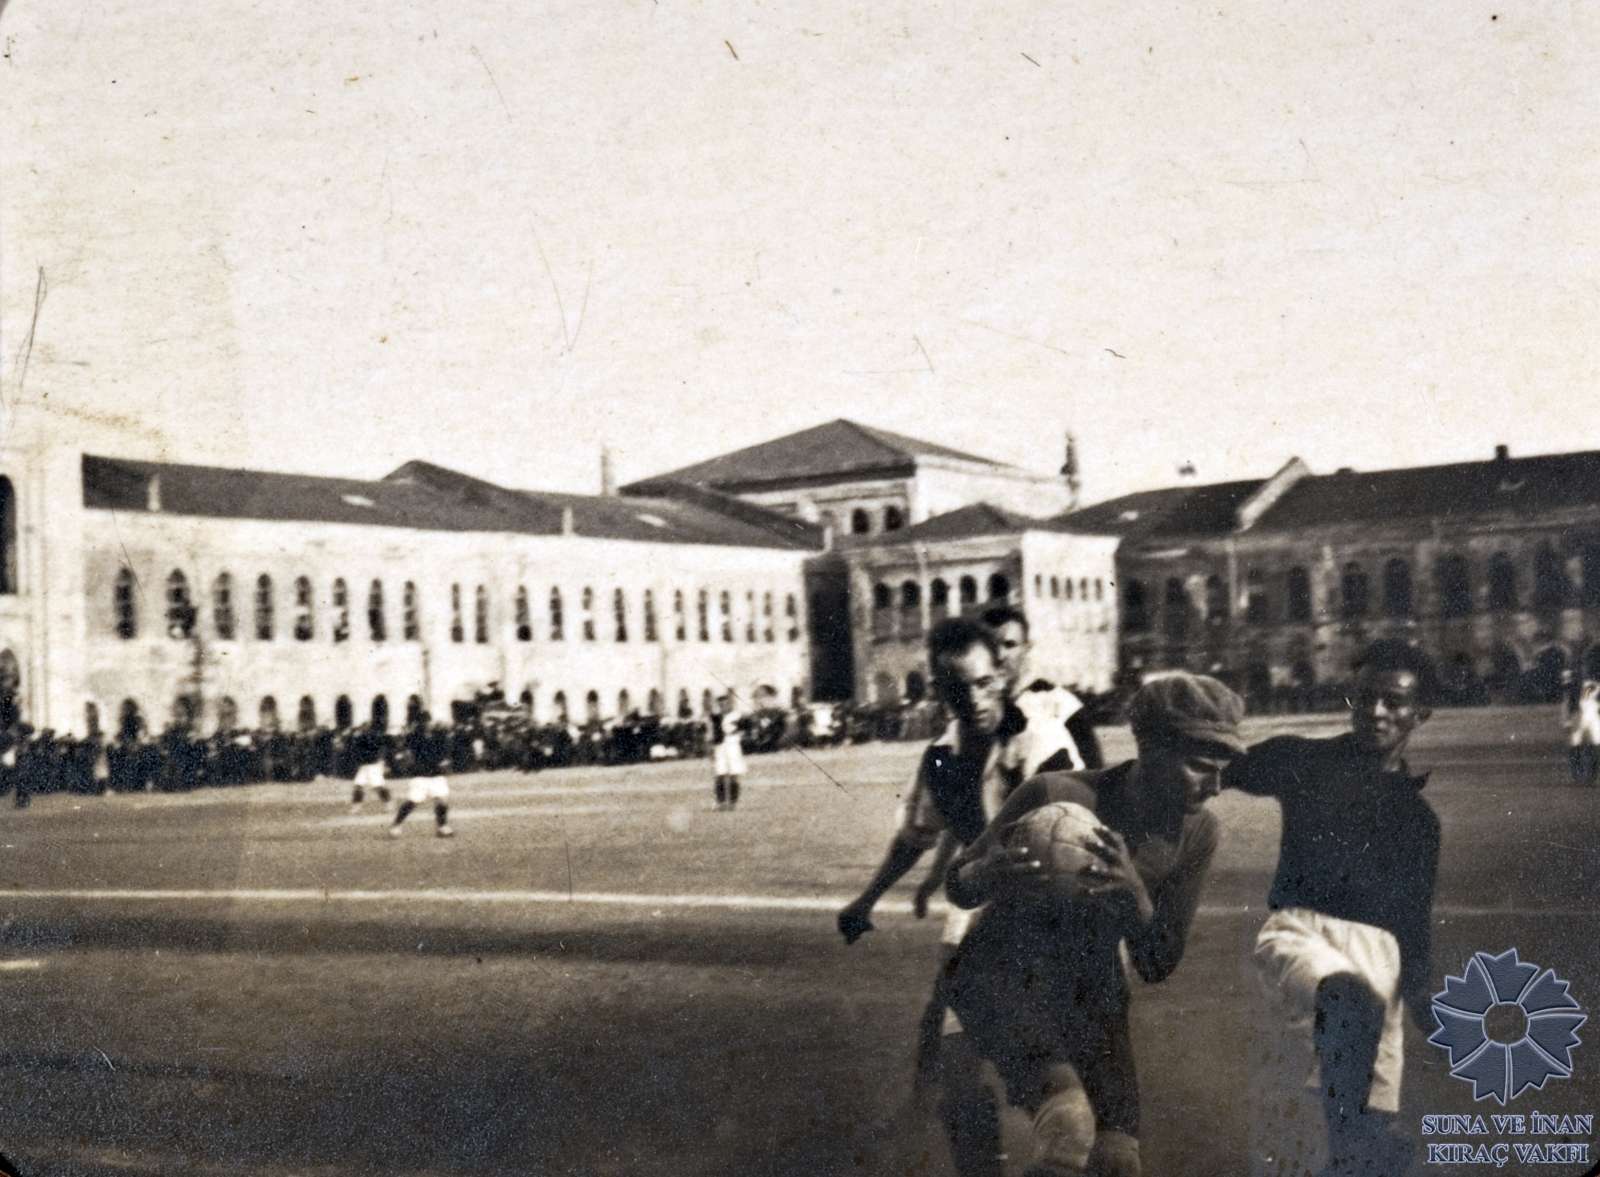 Slavia 1923 Istanbul